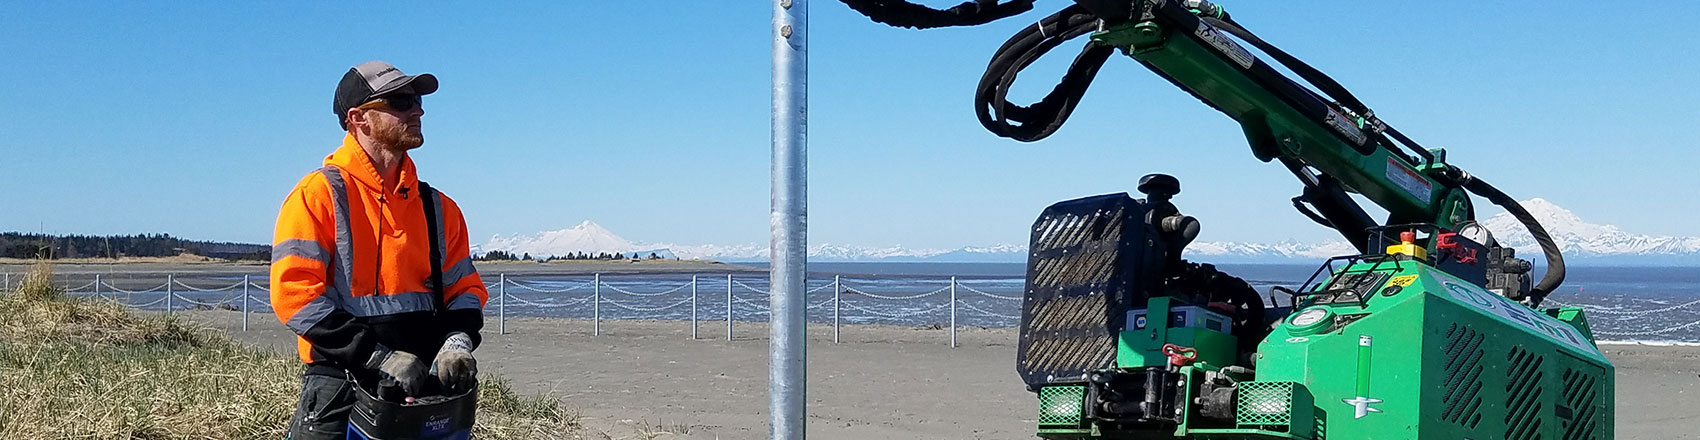 Crew member installing metal post on Alaskan coastline with volcanoes in the background.